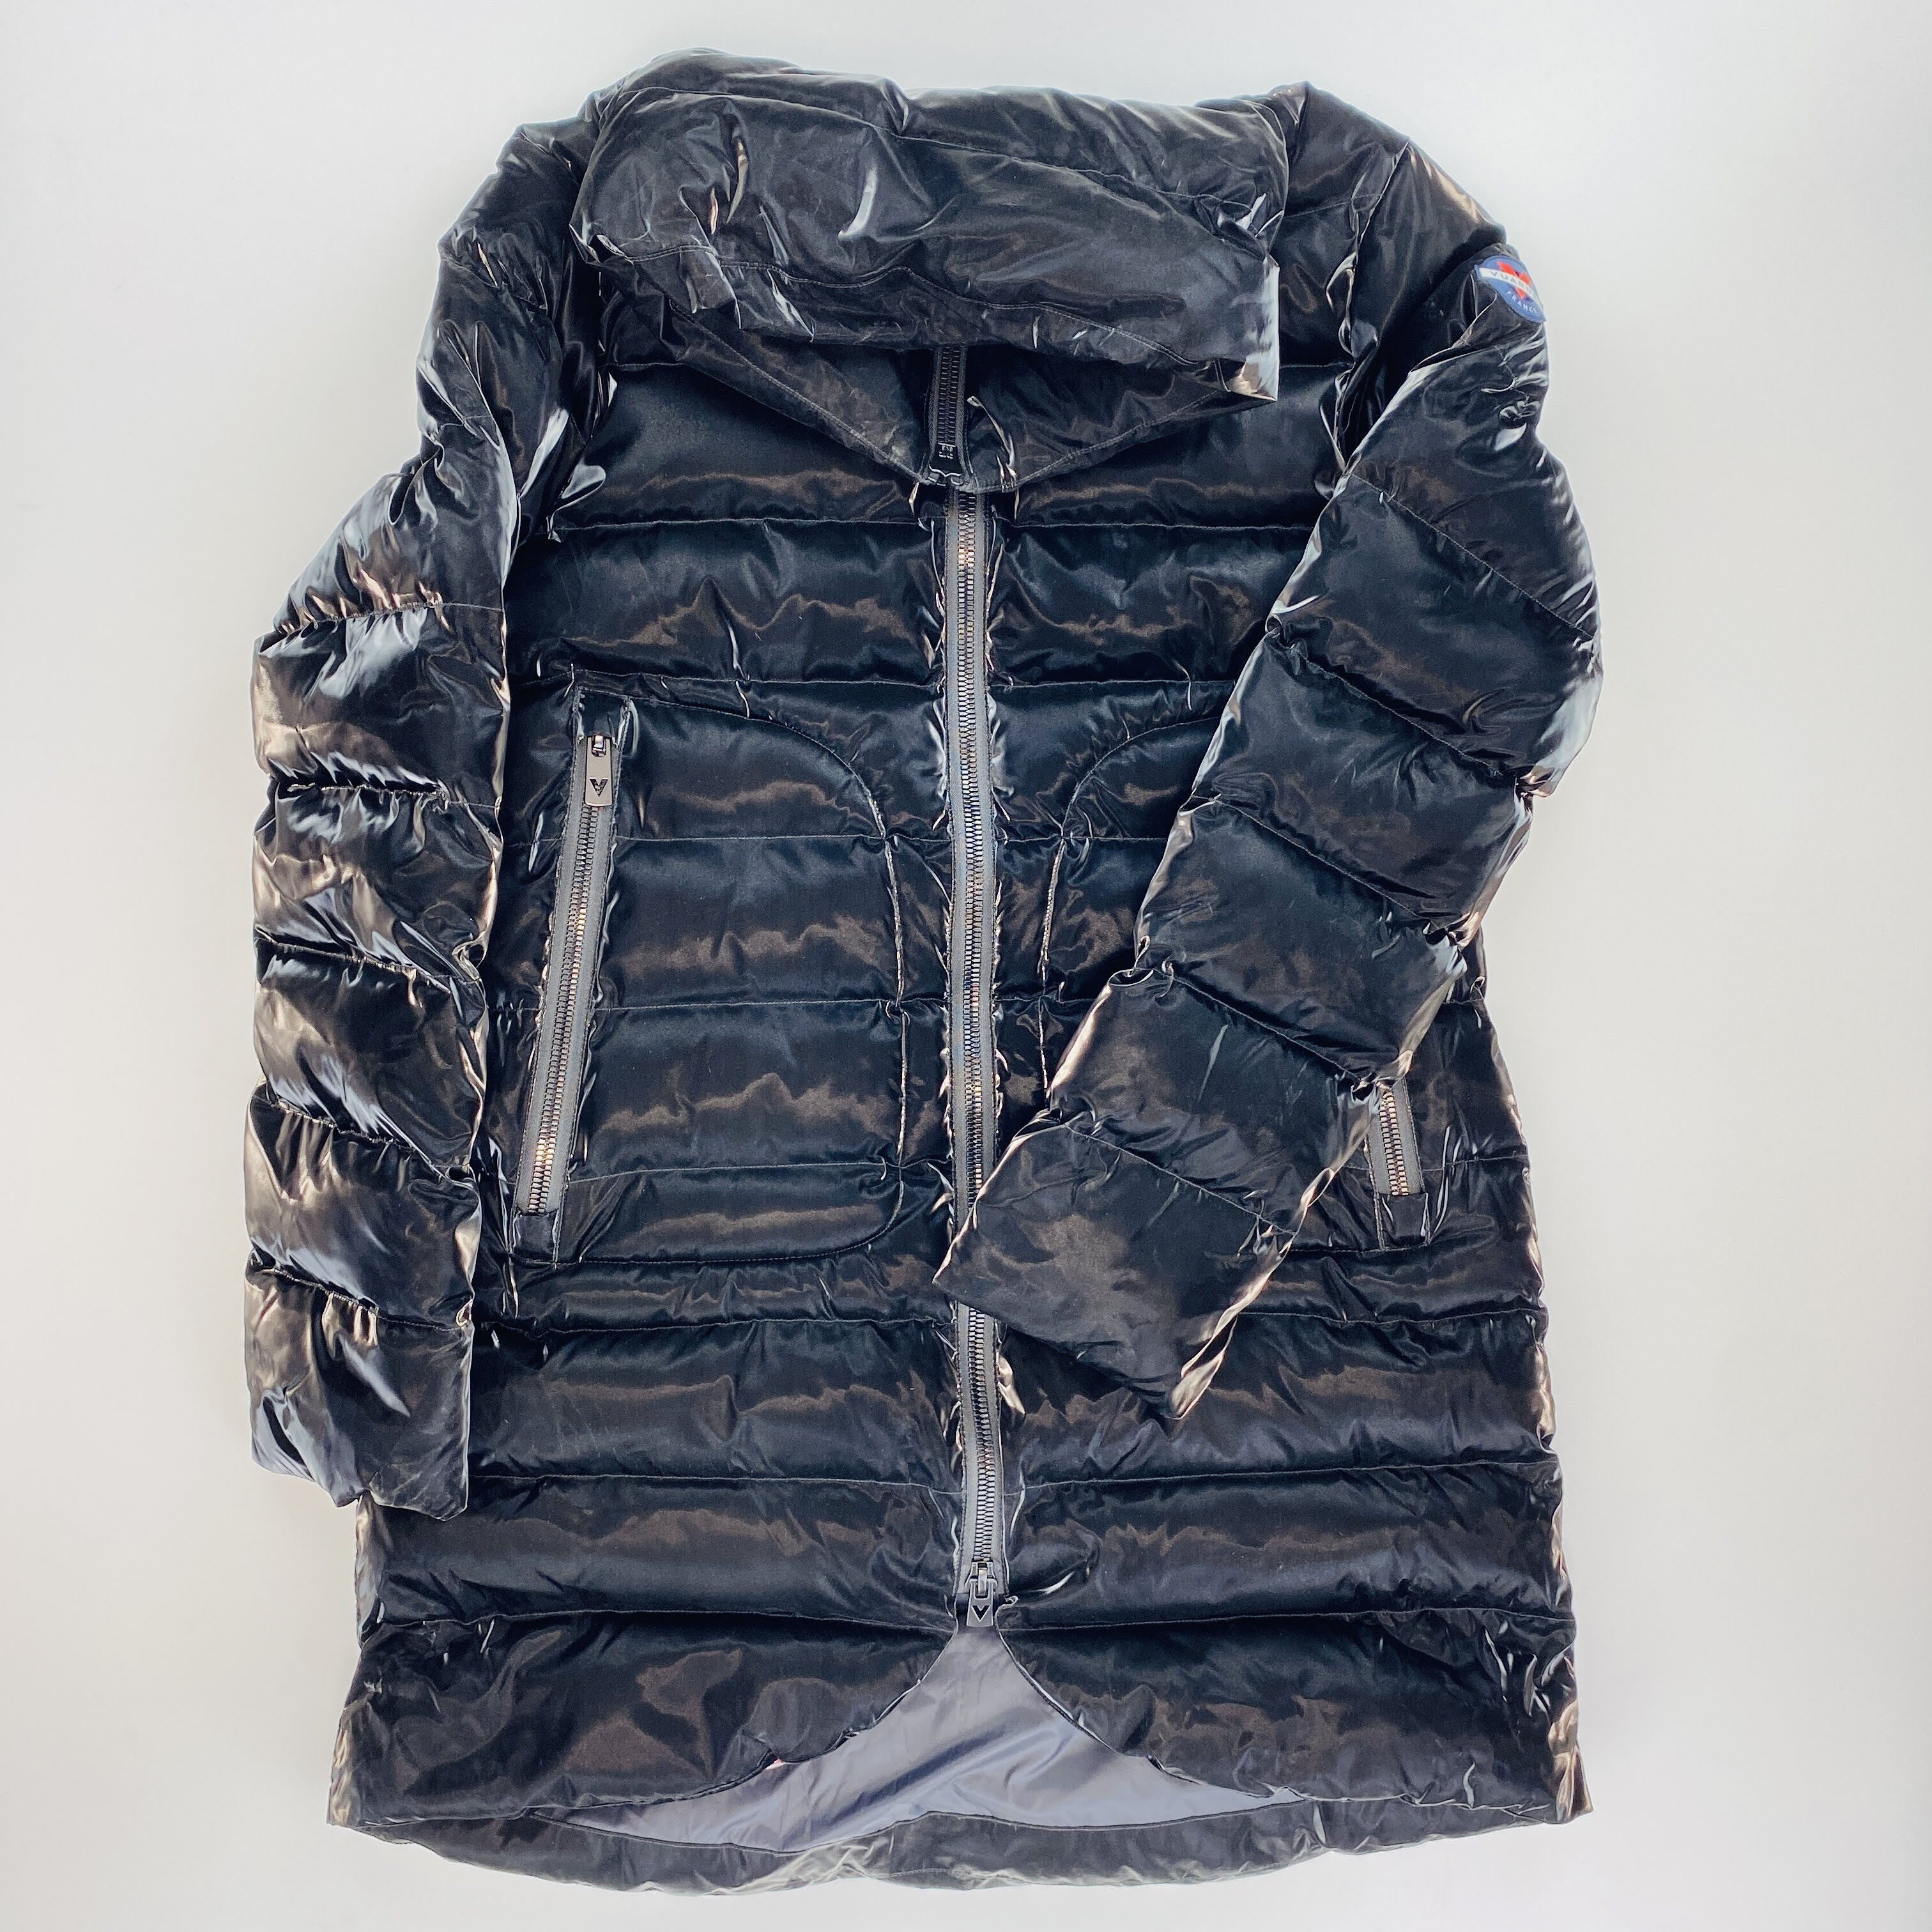 Vuarnet Eyre Jacket - Second Hand Synthetic jacket - Women's - Black - S | Hardloop